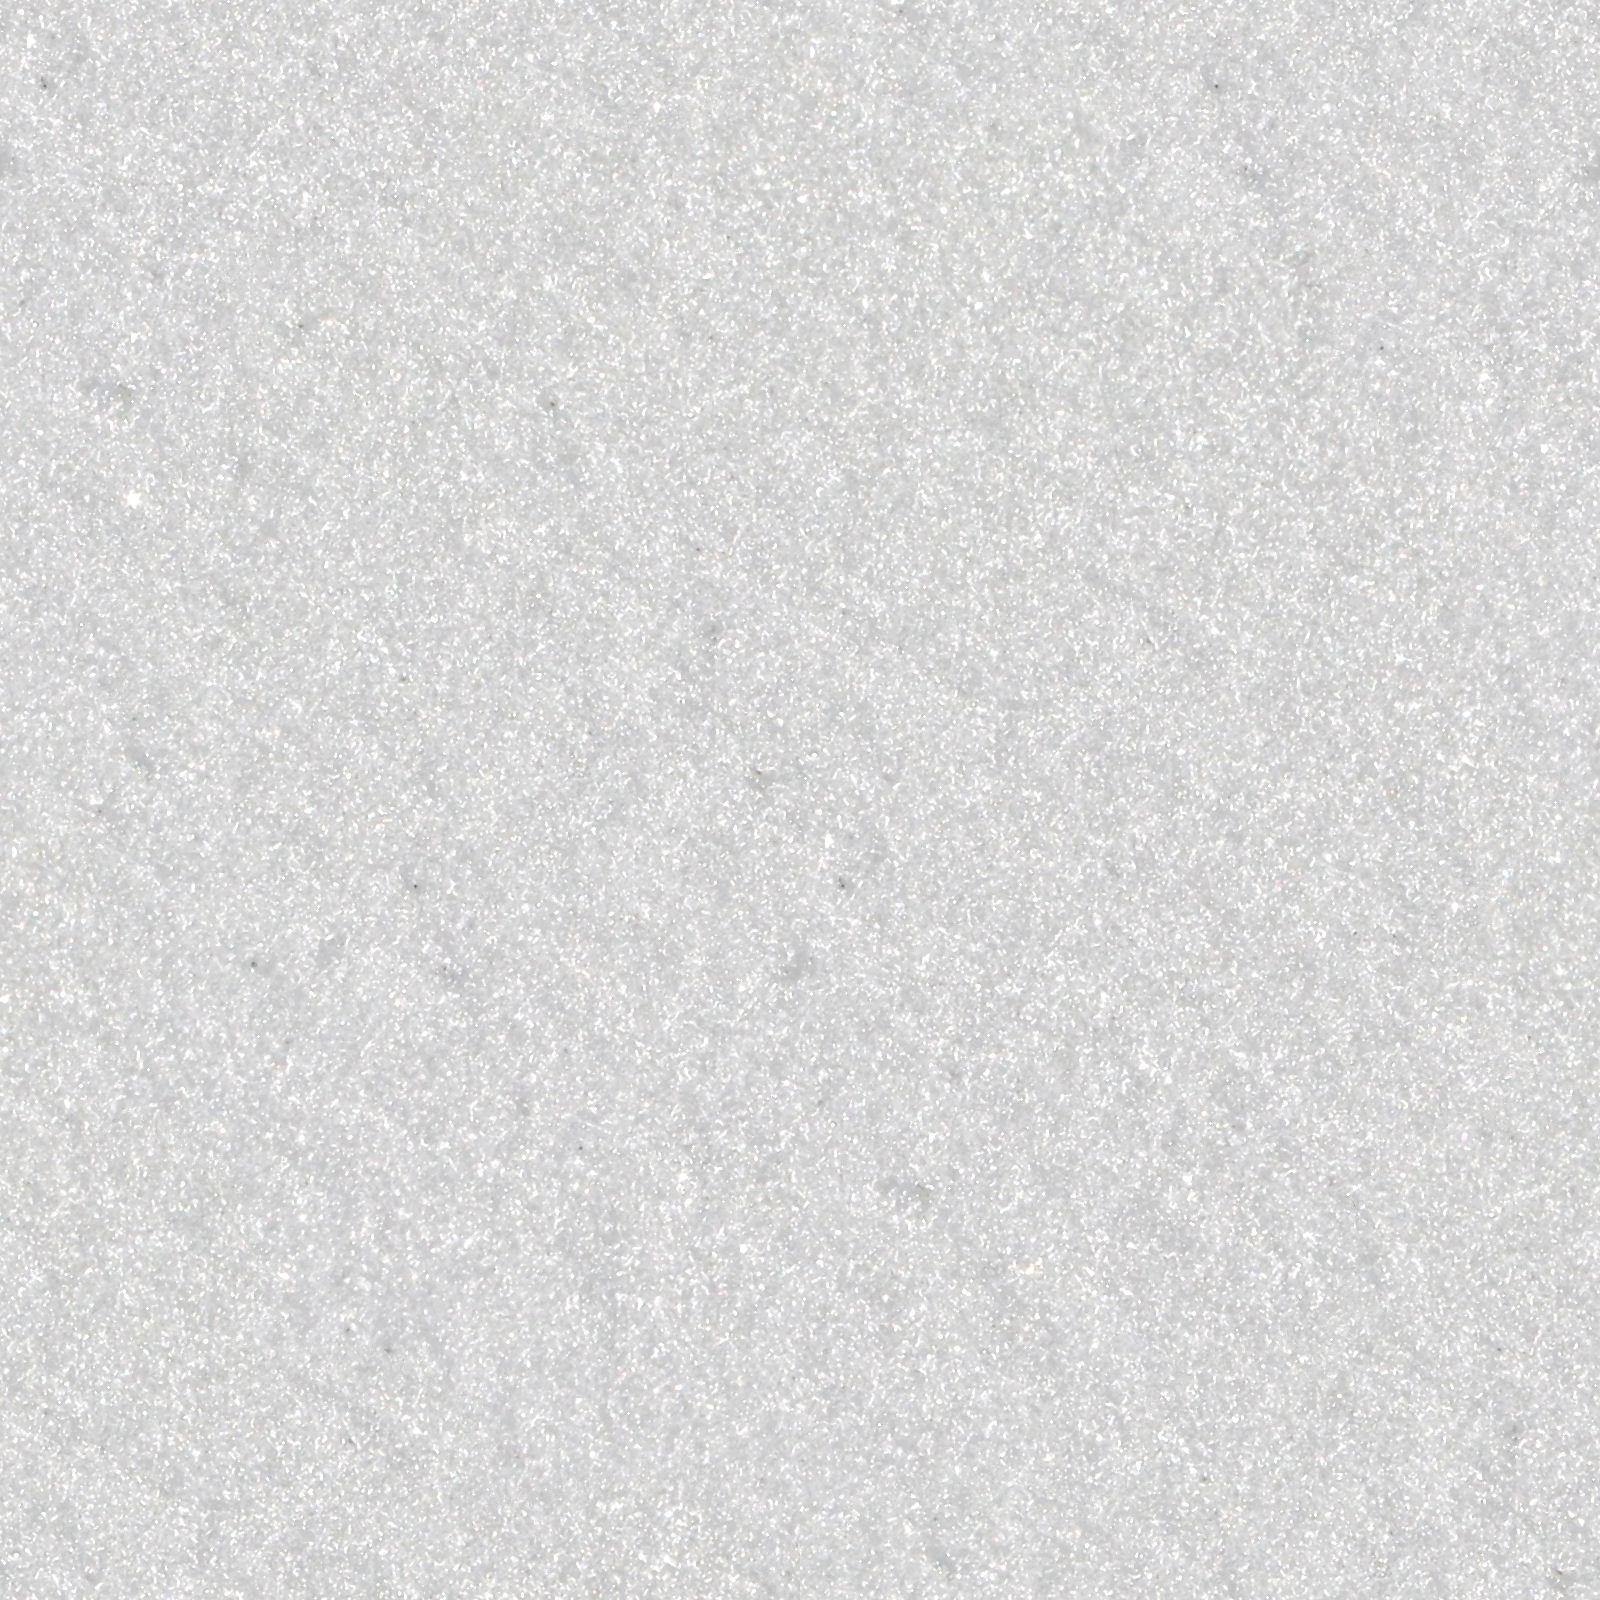 High Resolution Seamless Textures: Seamless snow ice texture